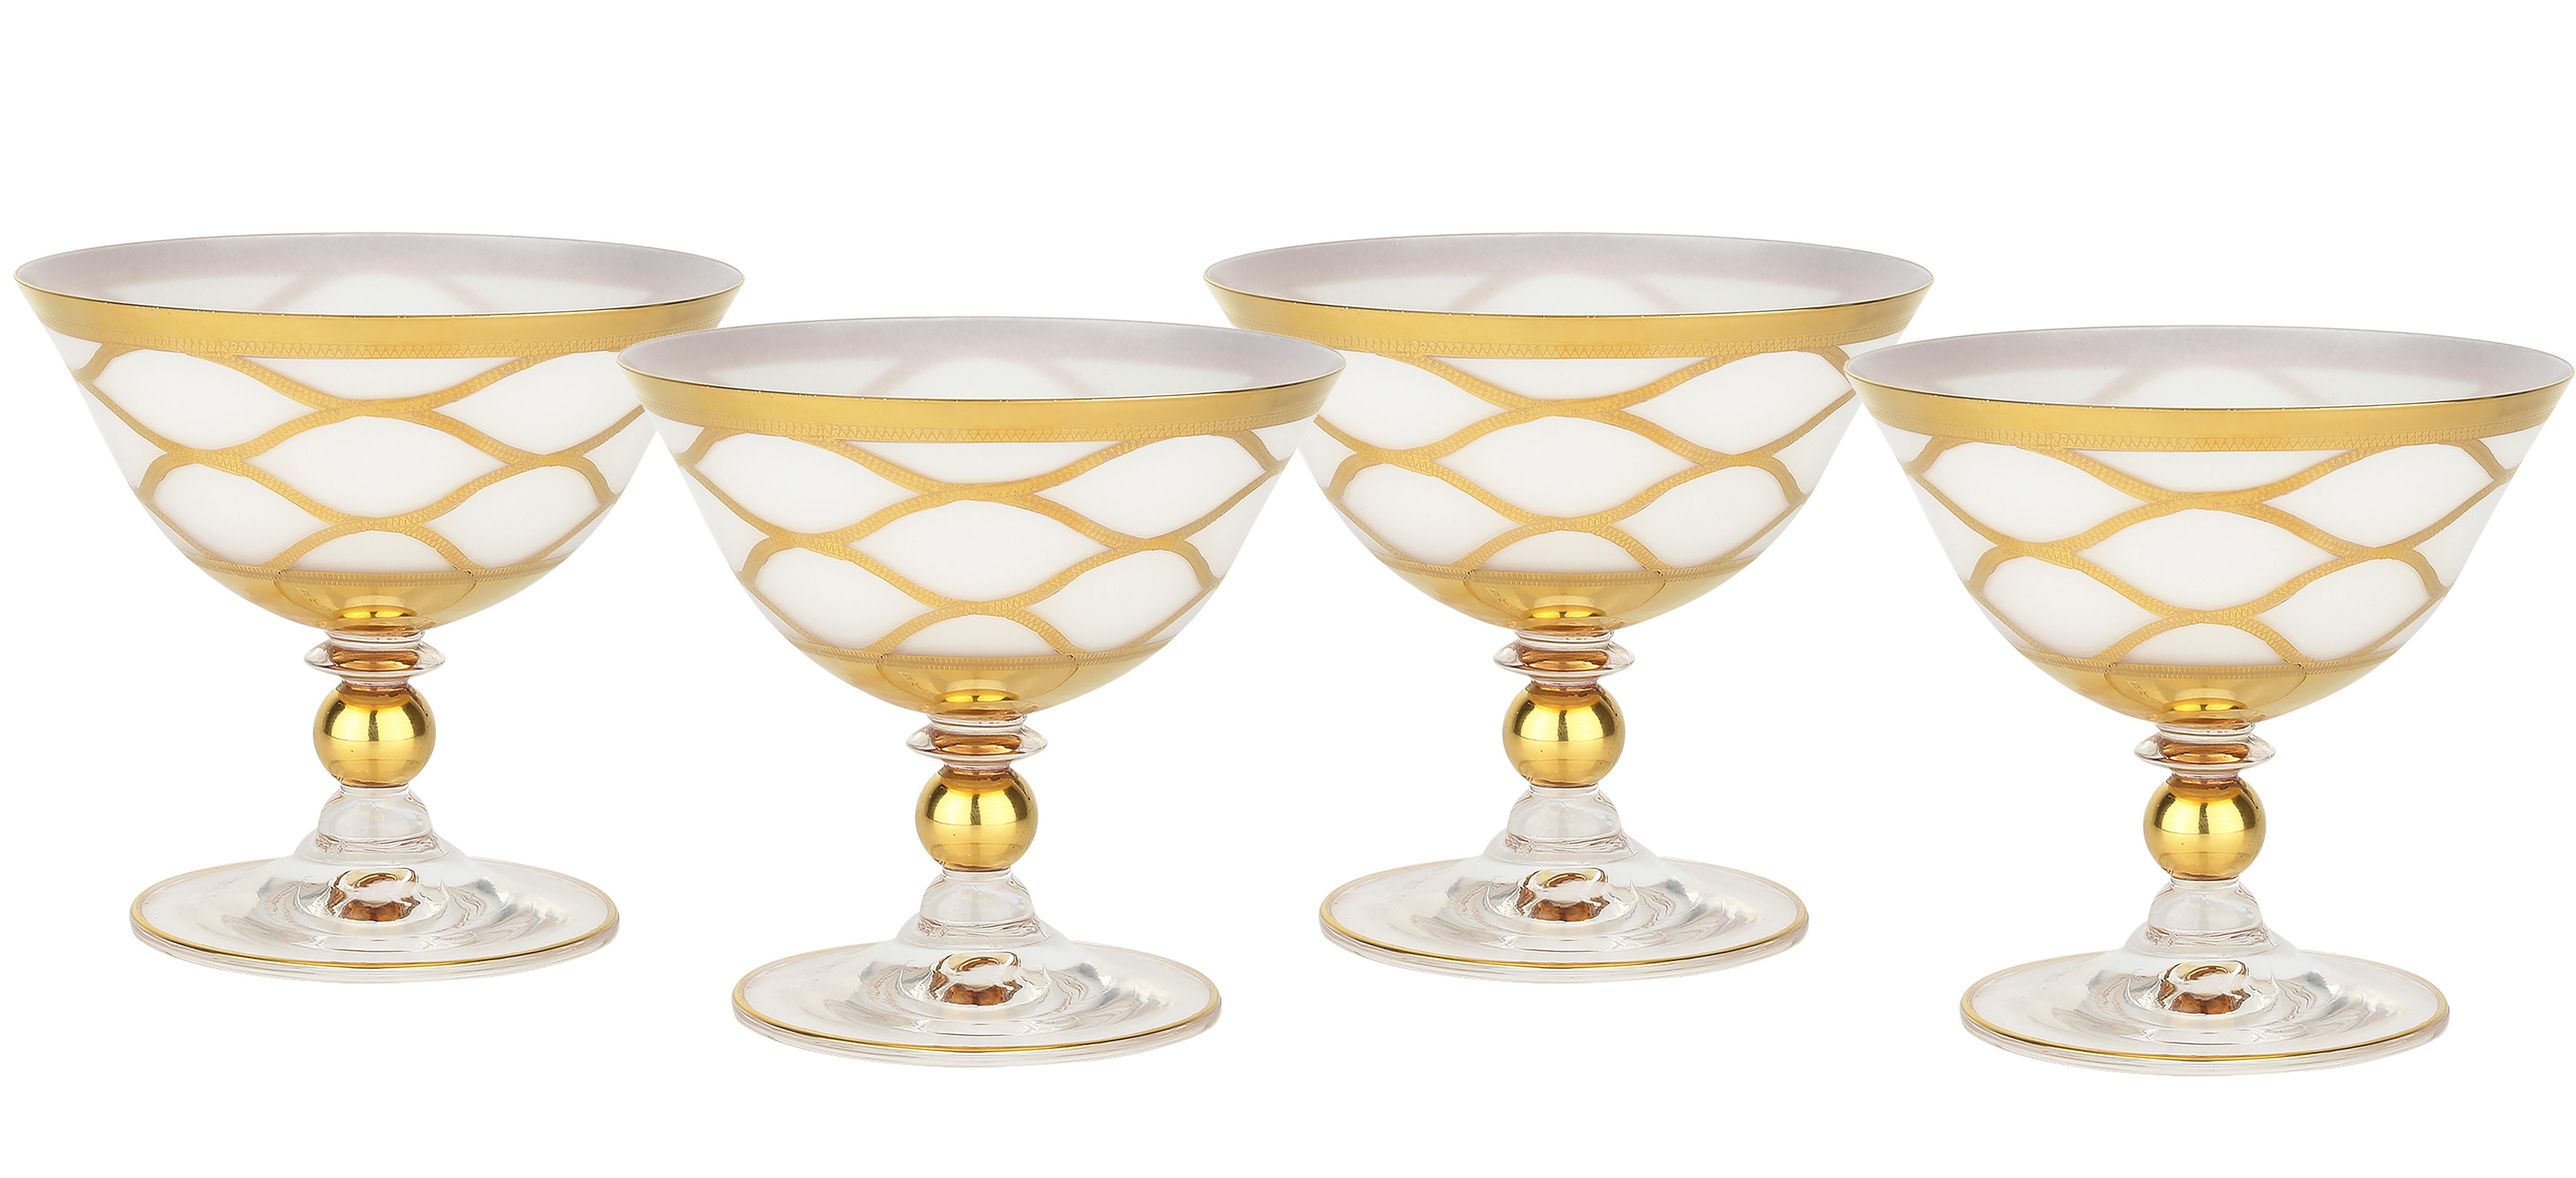 Glass Dessert Cups
 Set of 4 Milk Glass Dessert Cups with 24K Gold Design